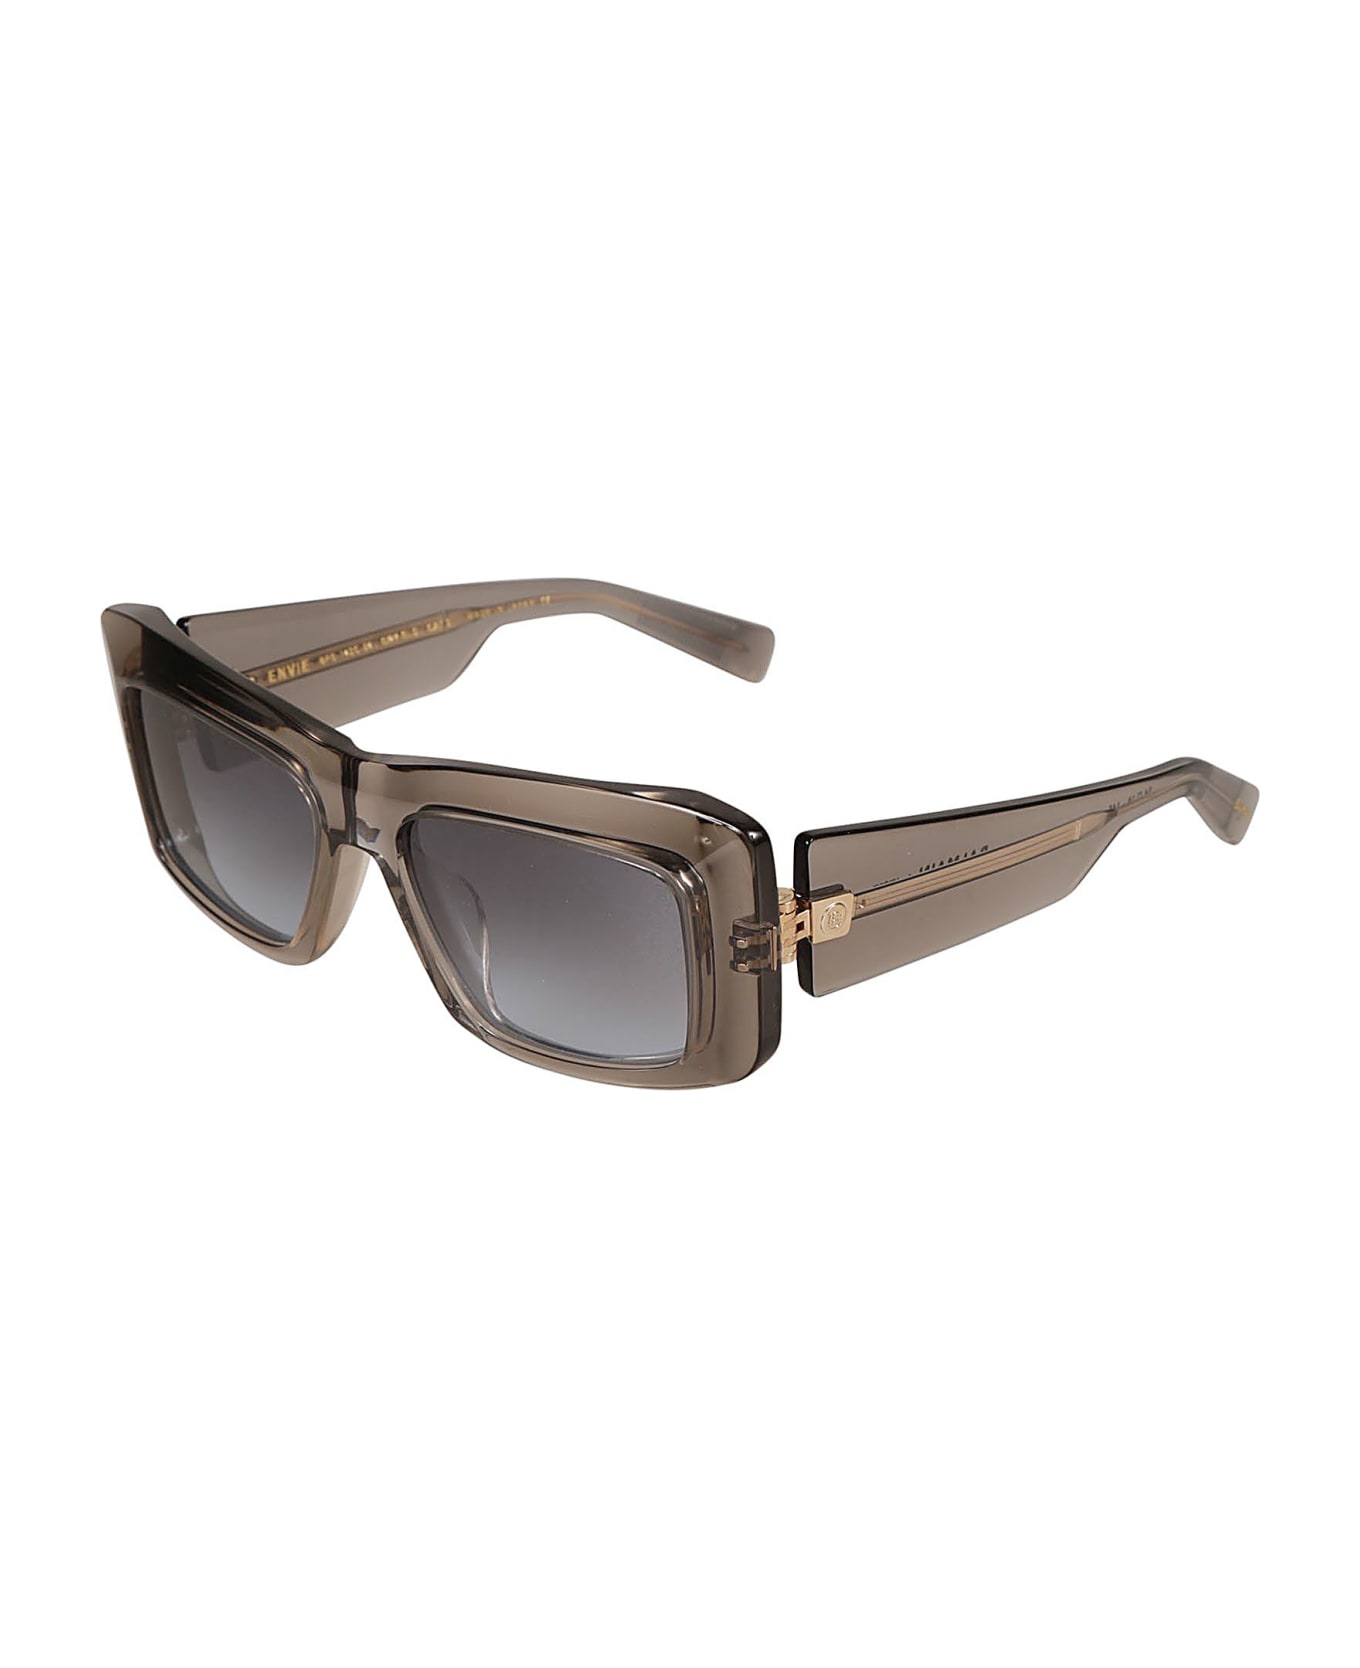 Balmain Envie Sunglasses Sunglasses - Grey/Gold